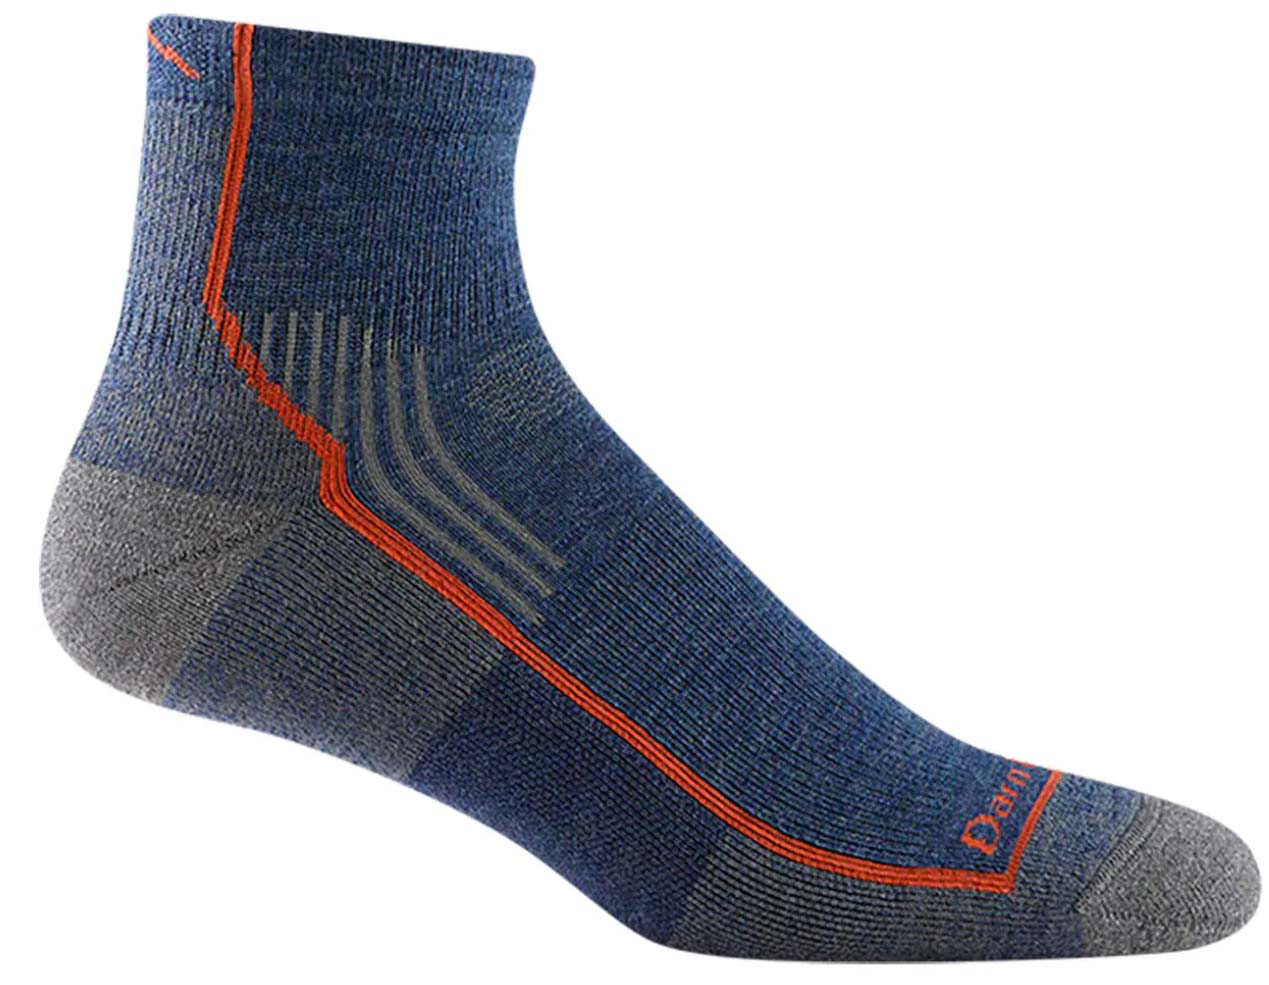 Bear Wool Hiking Socks  Cushioned Merino Socks for Women Hikers